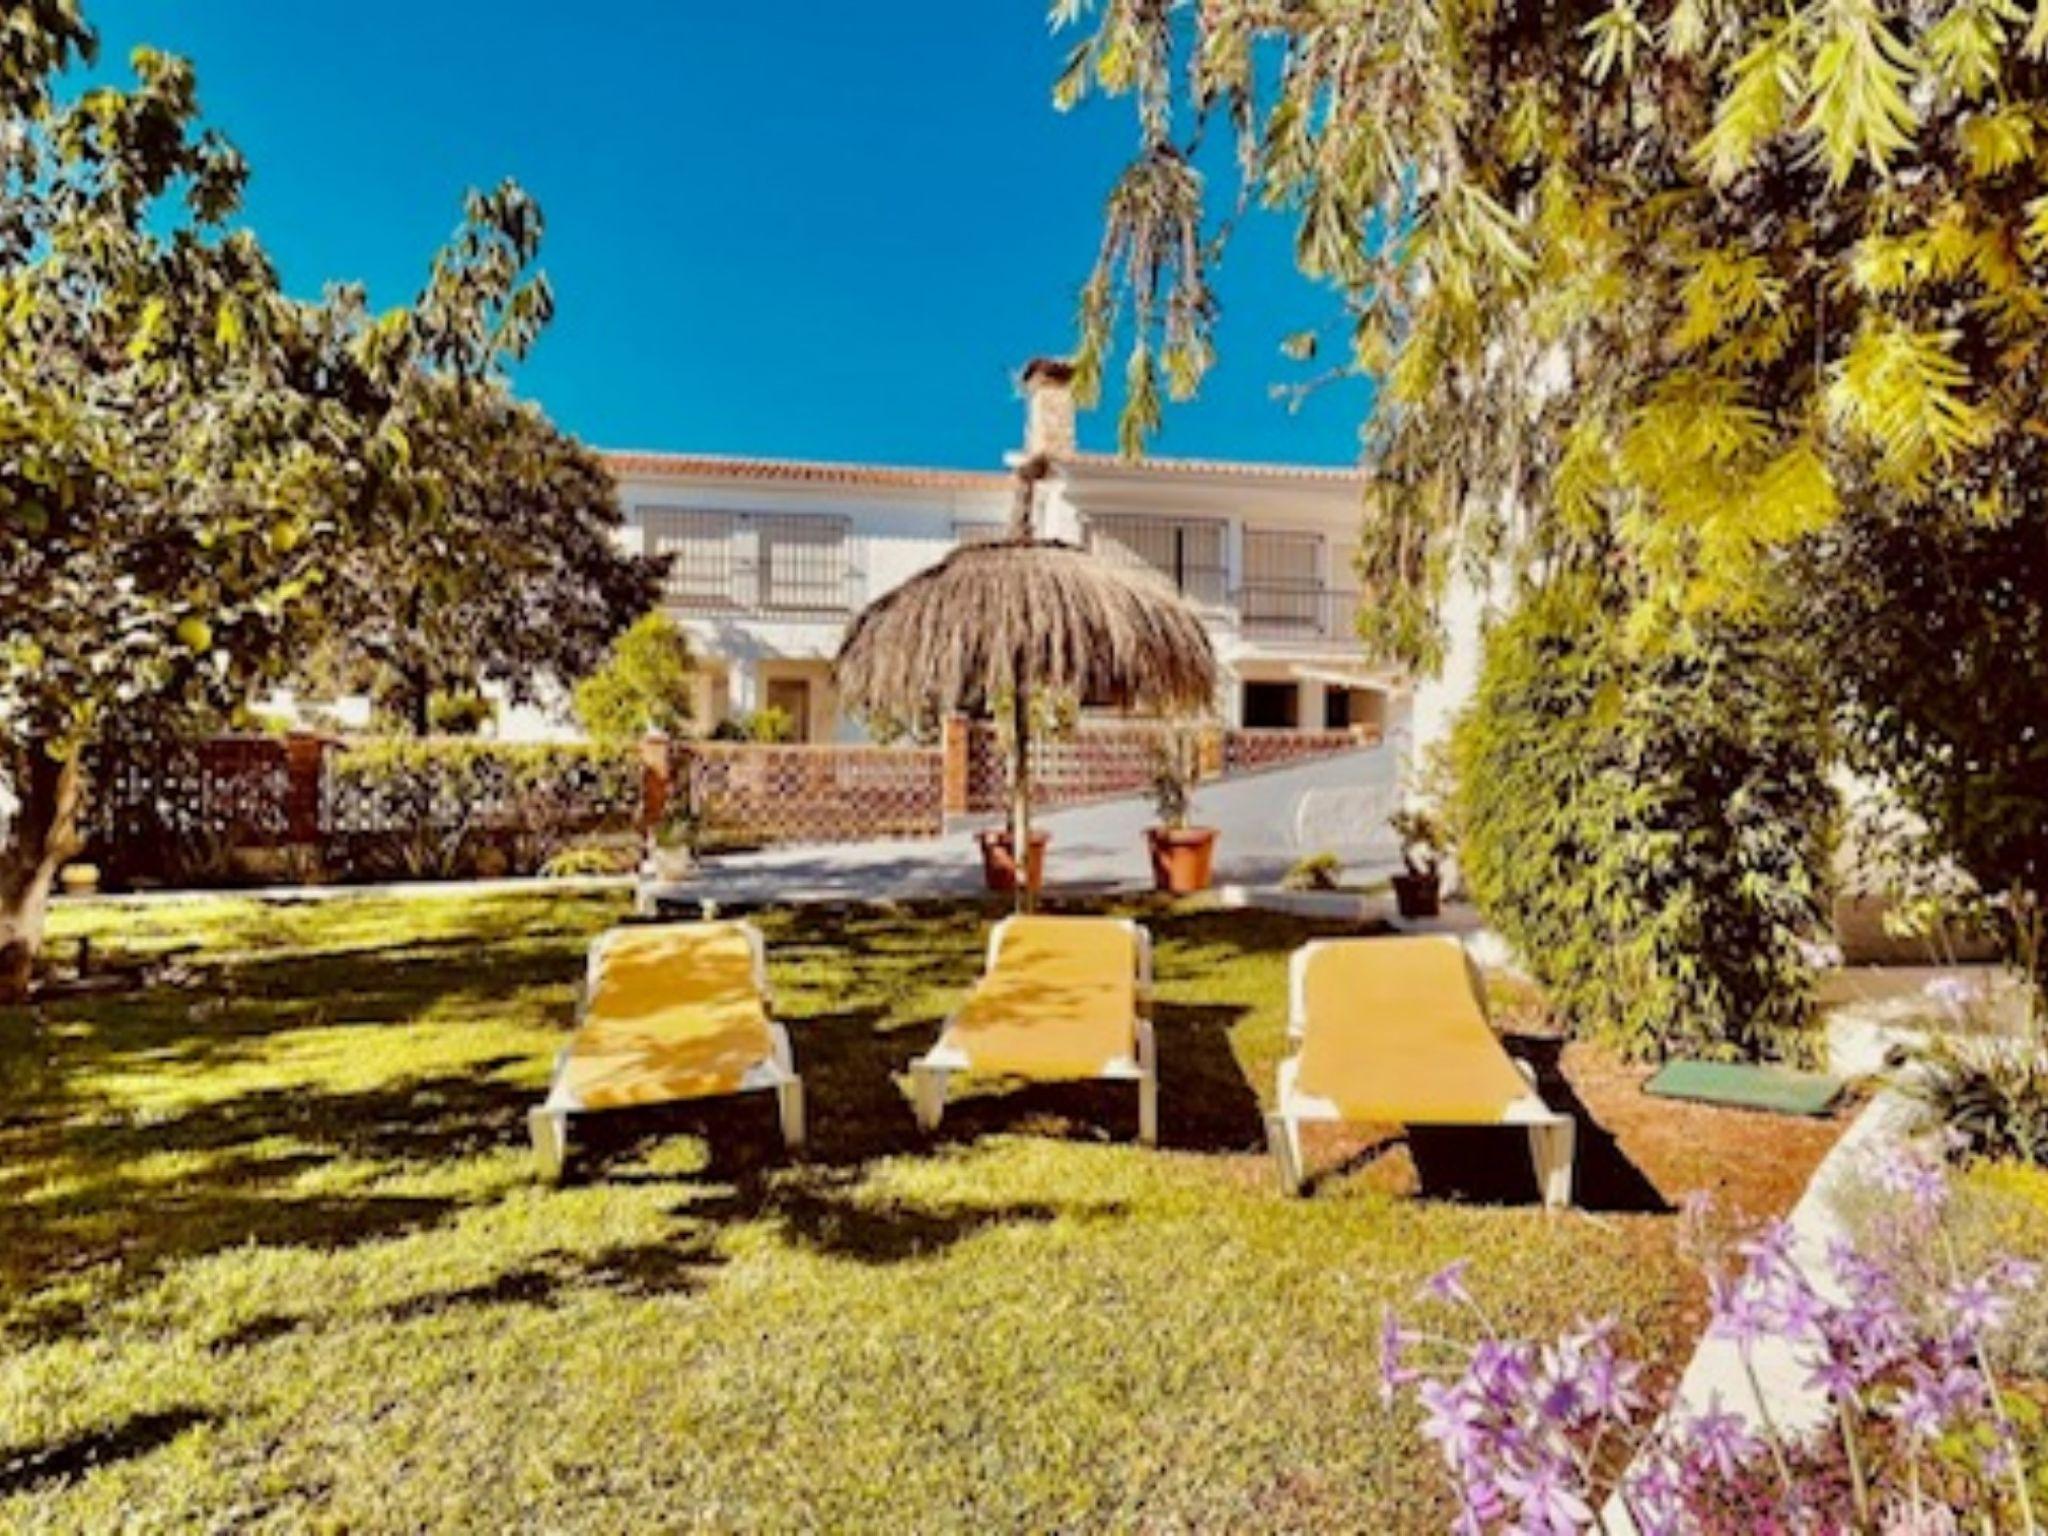 Foto 18 - Casa con 4 camere da letto a Vélez-Málaga con piscina privata e vista mare